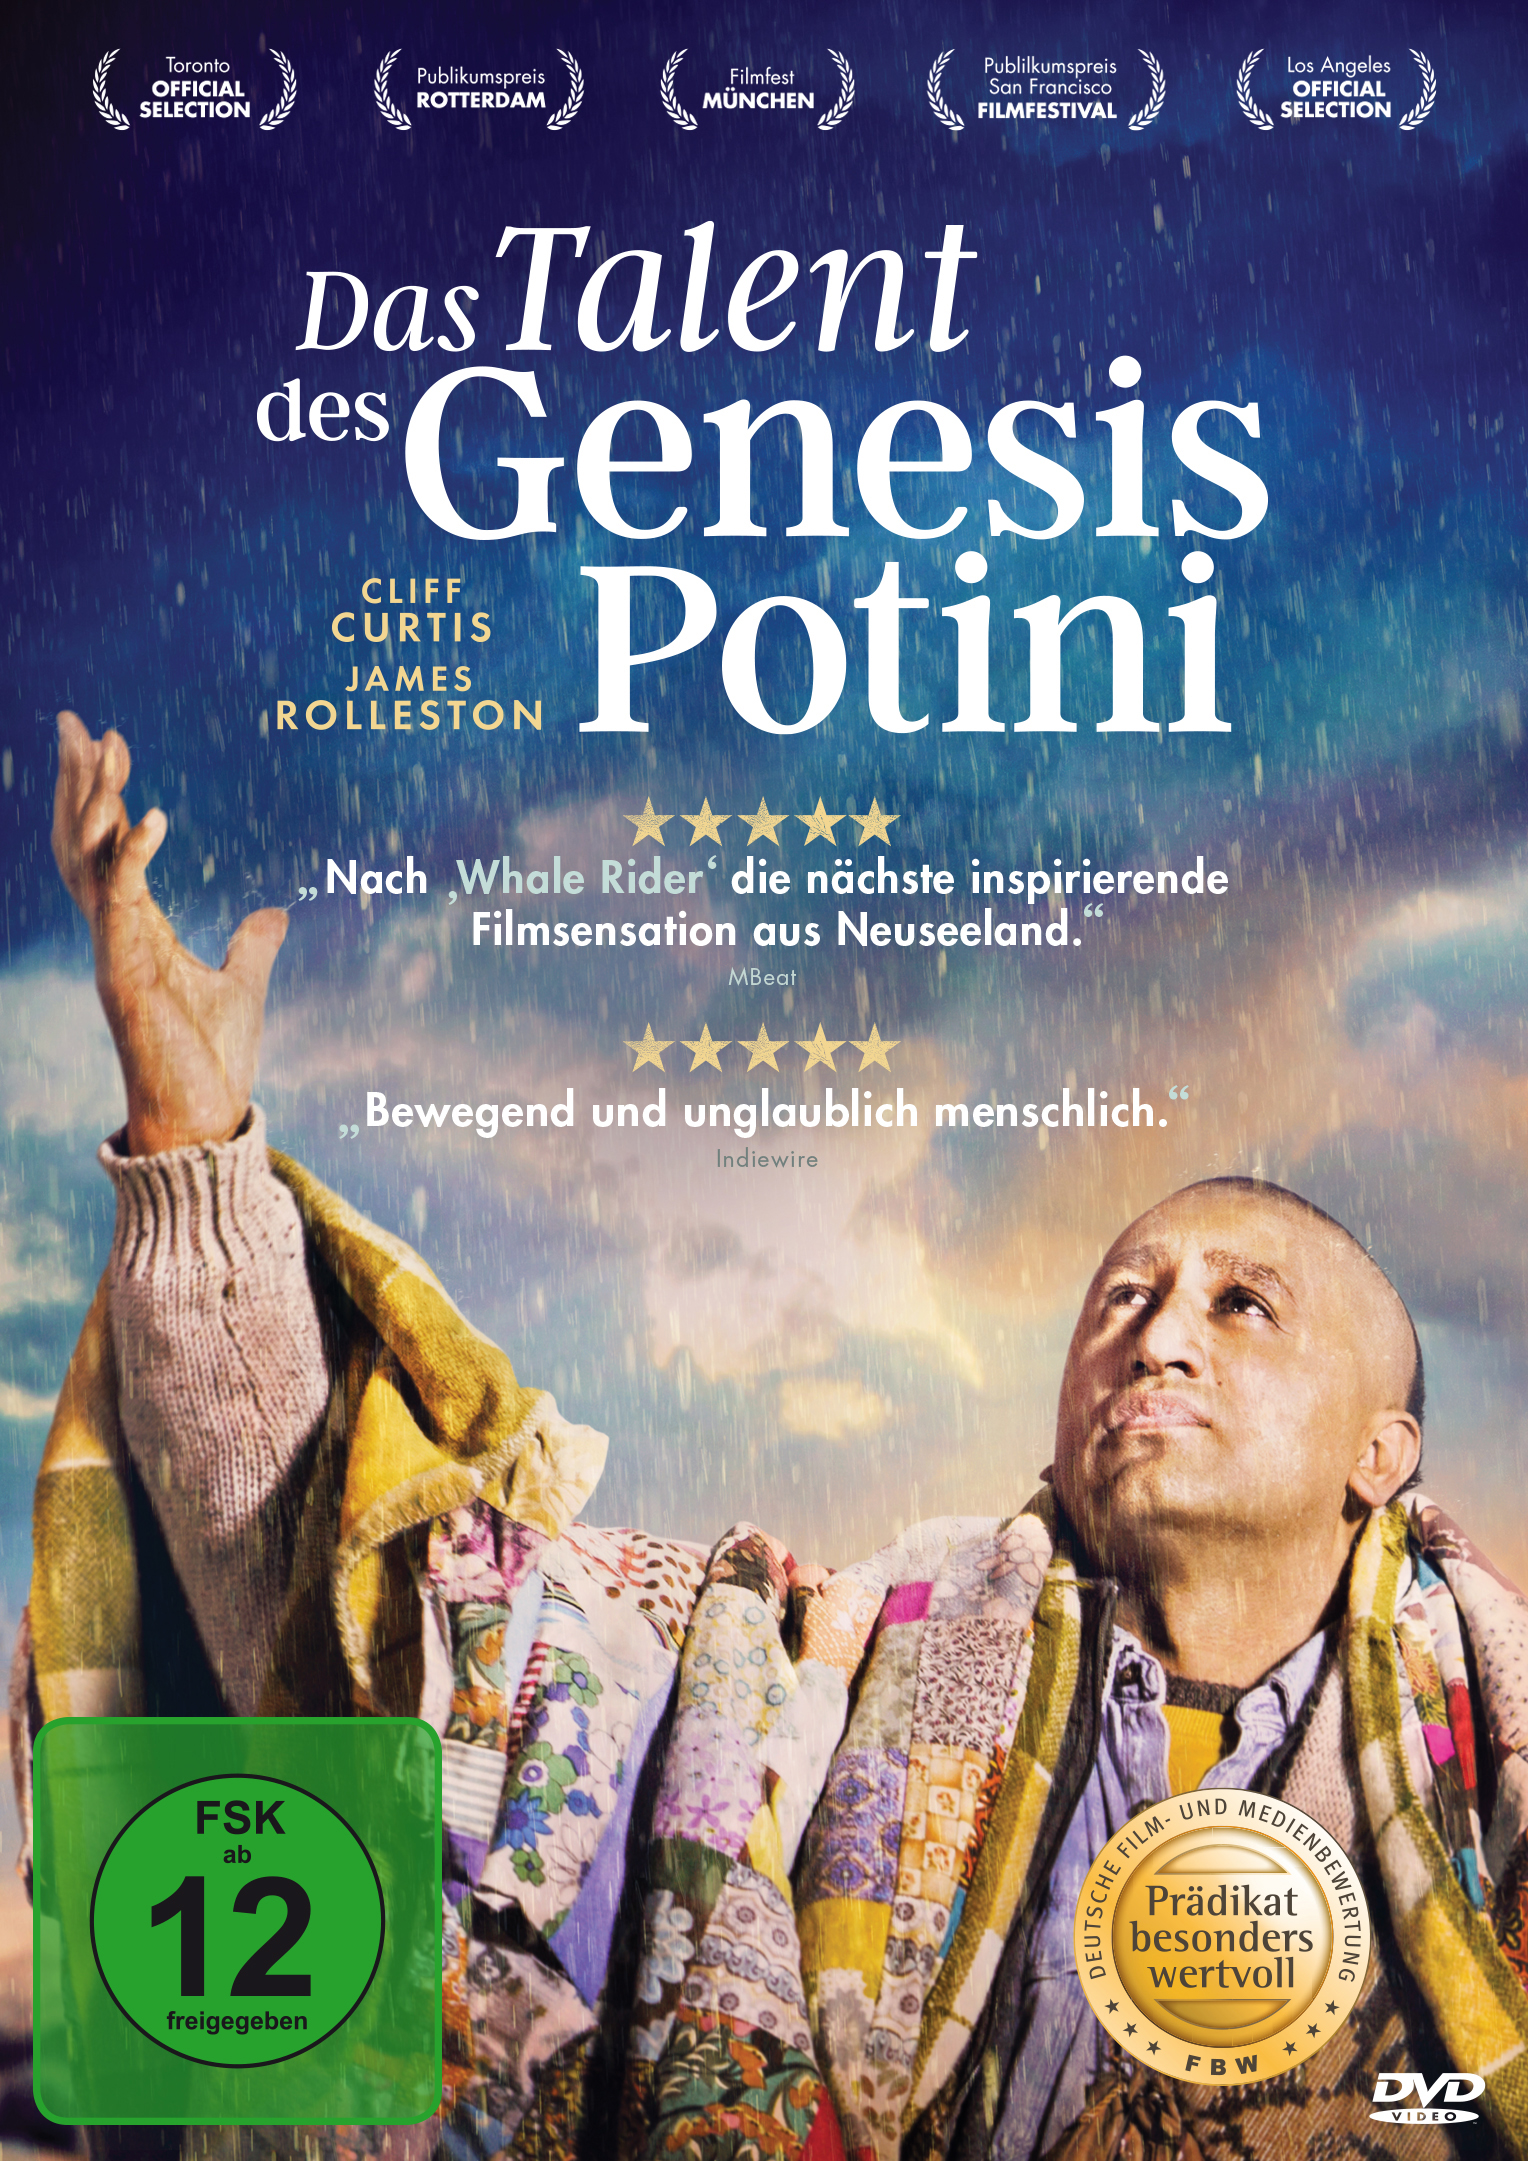 Das Talent Potini des DVD Genesis